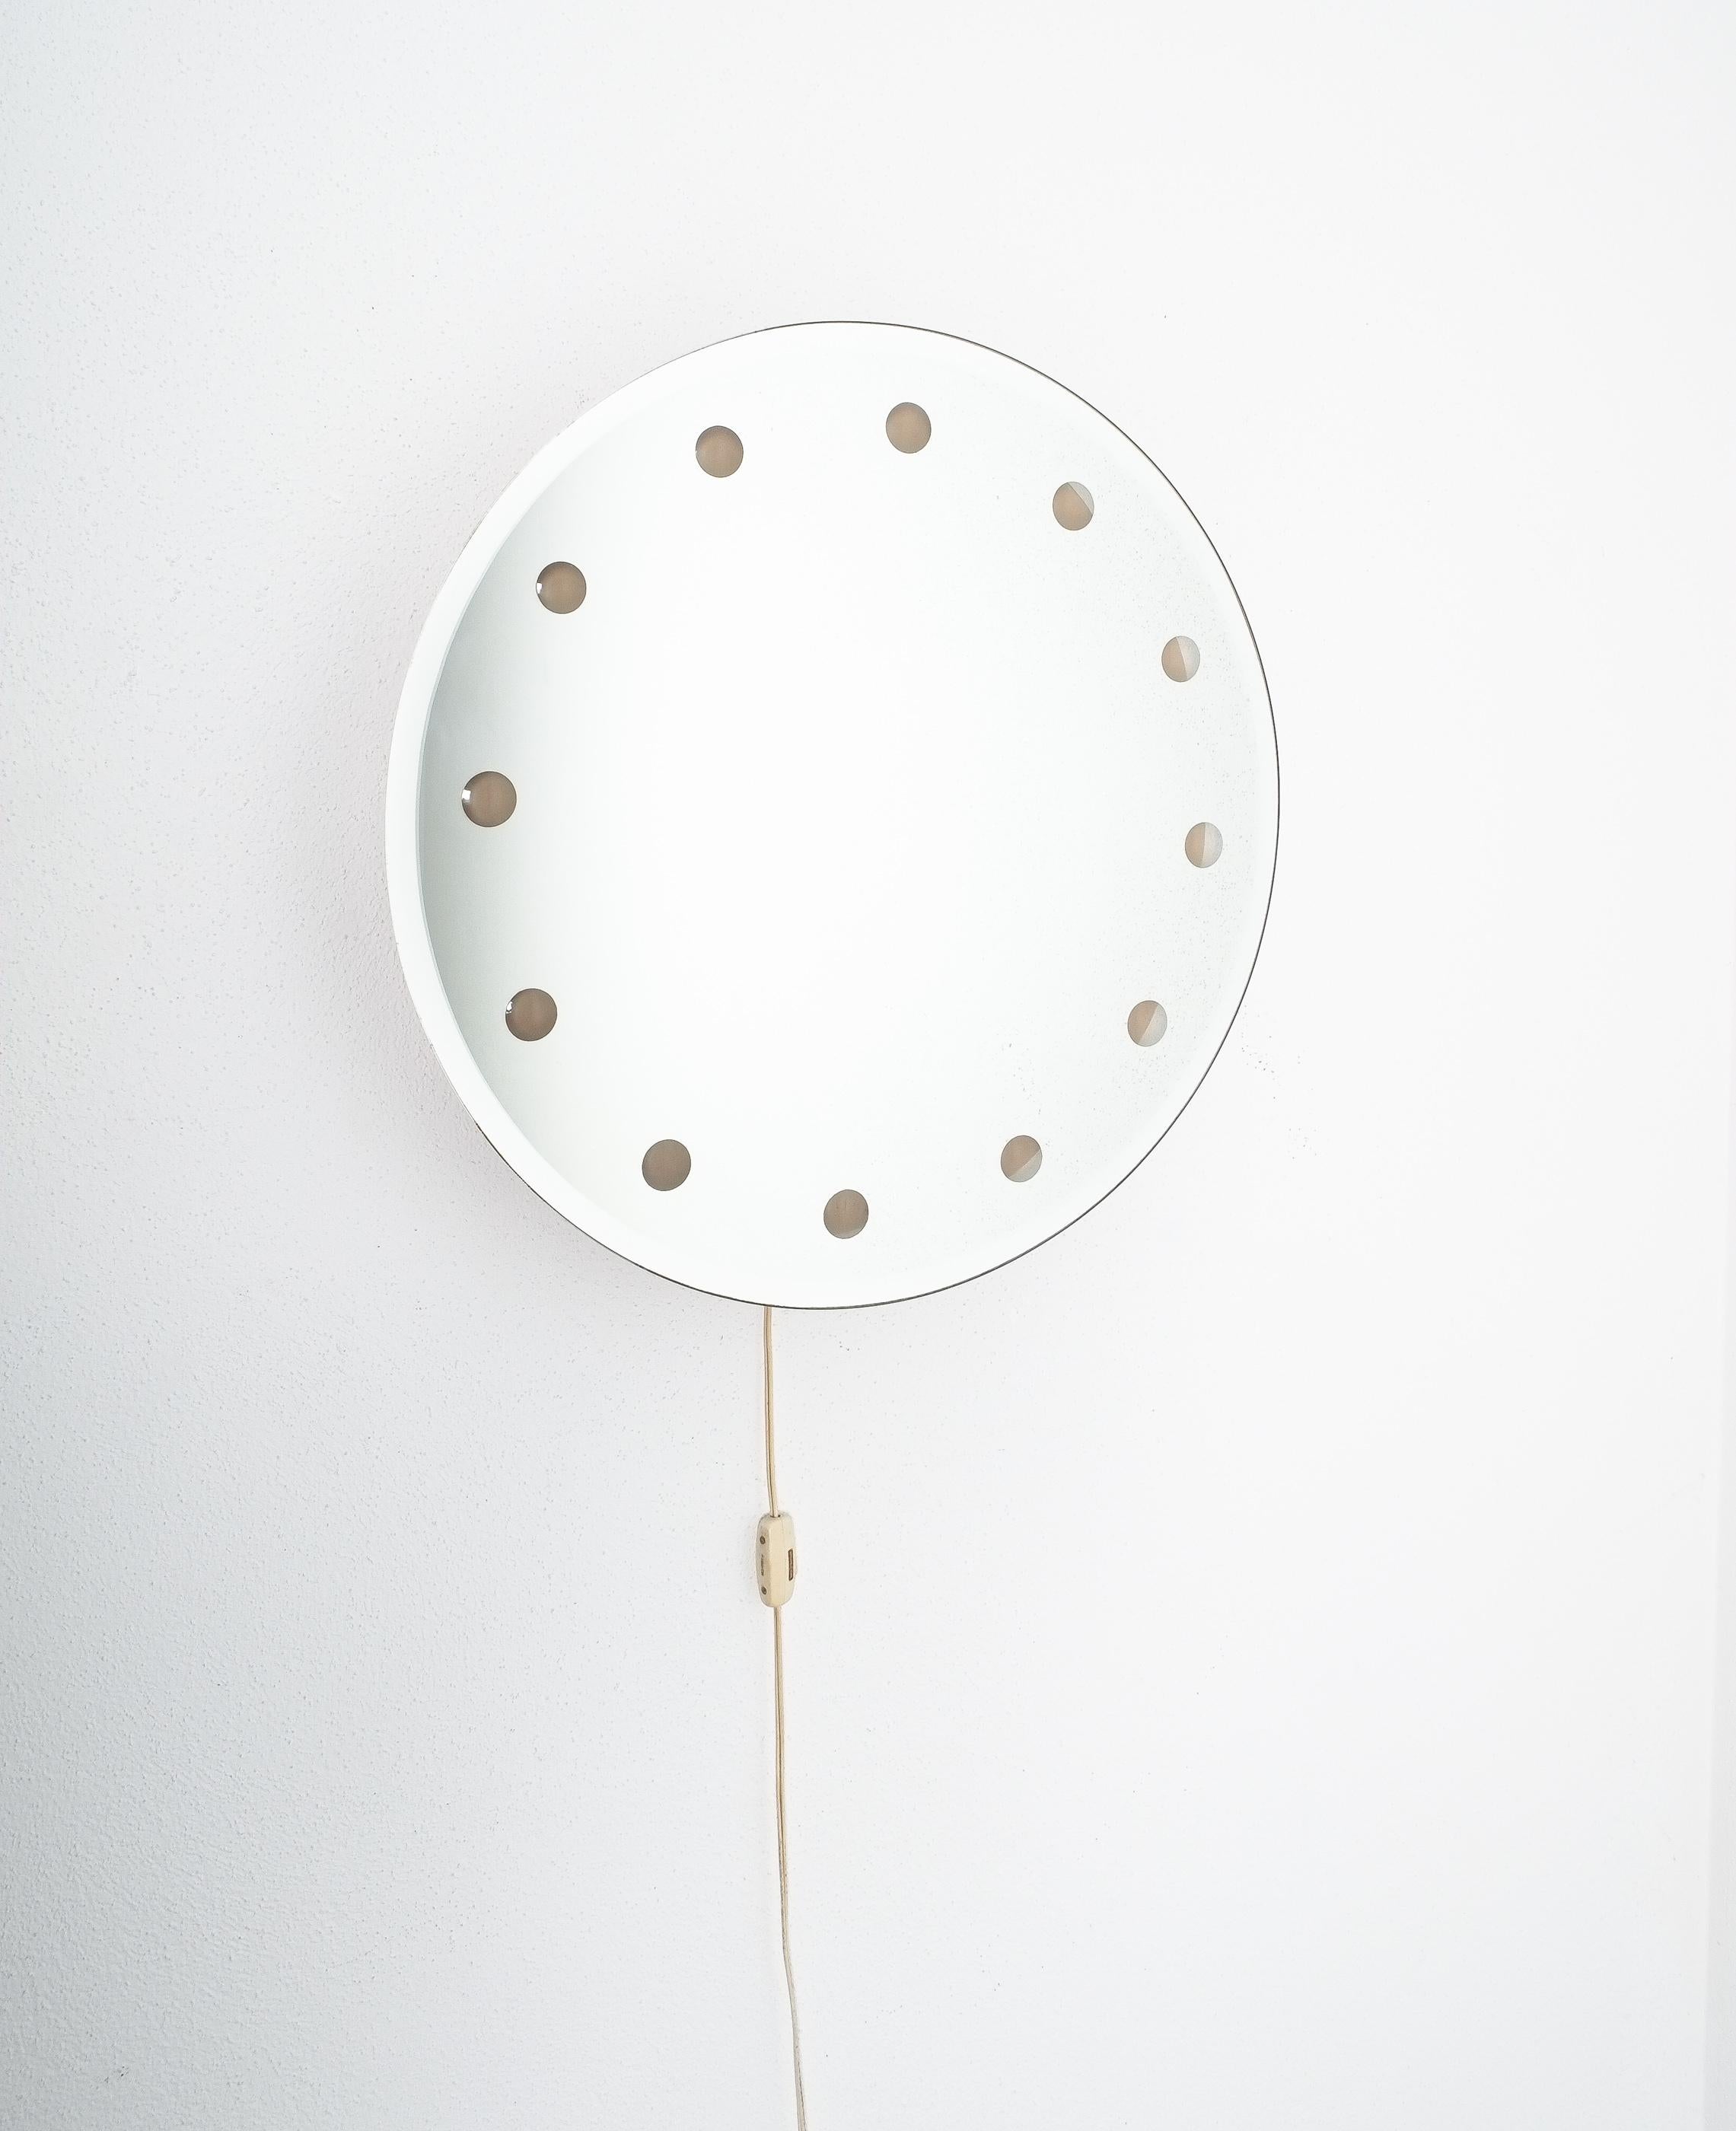 Gino Sarfatti Attributed Round Illuminated Mirror, Italy, circa 1960 For Sale 1